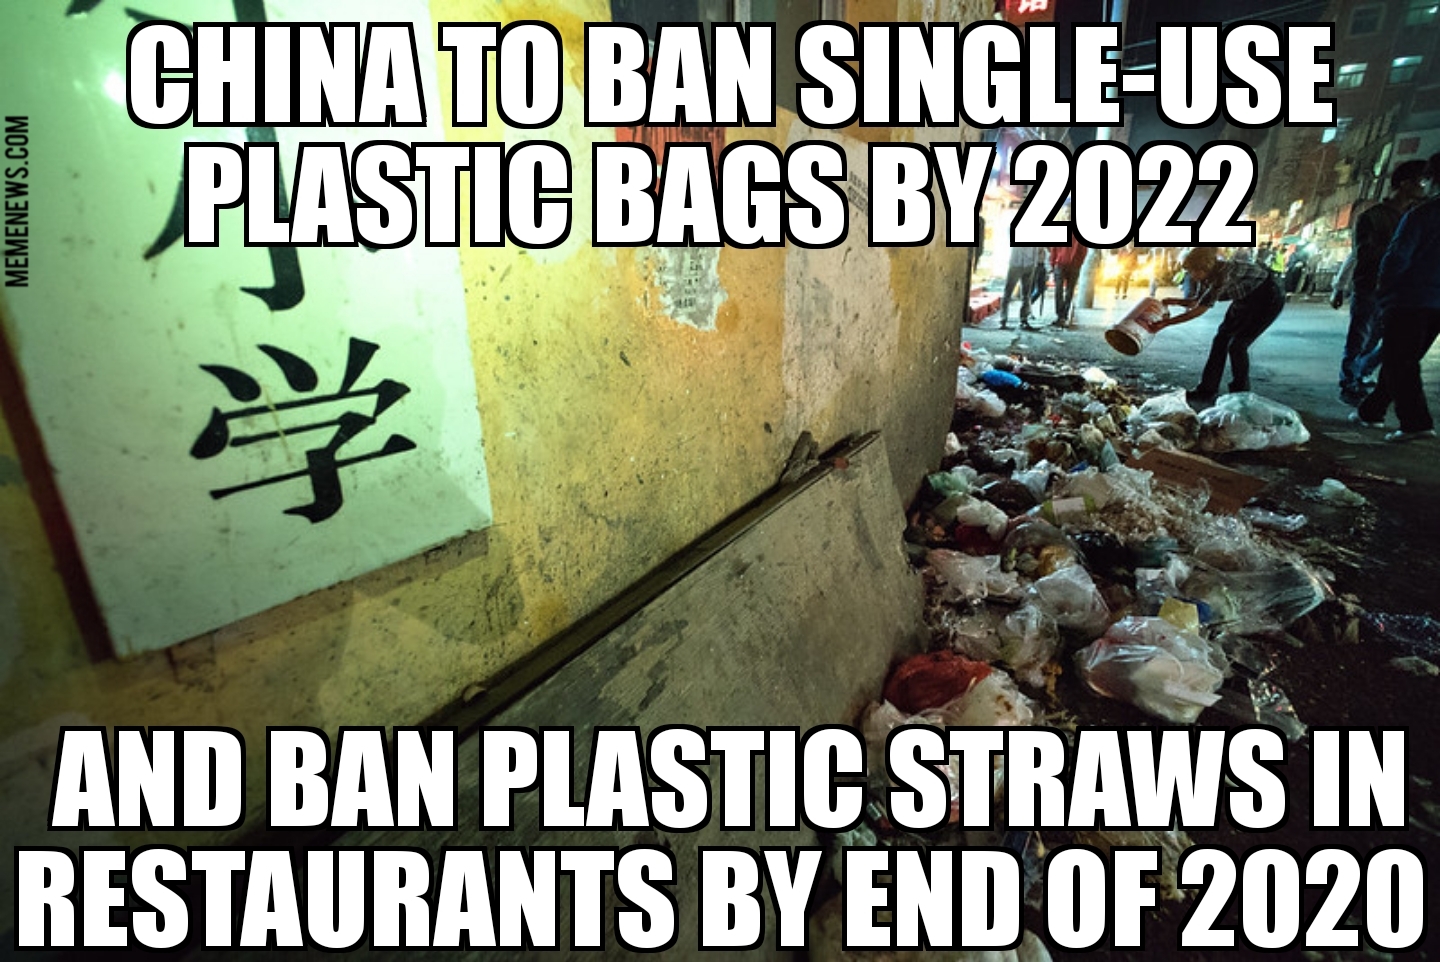 China to ban plastic bags, plastic straws